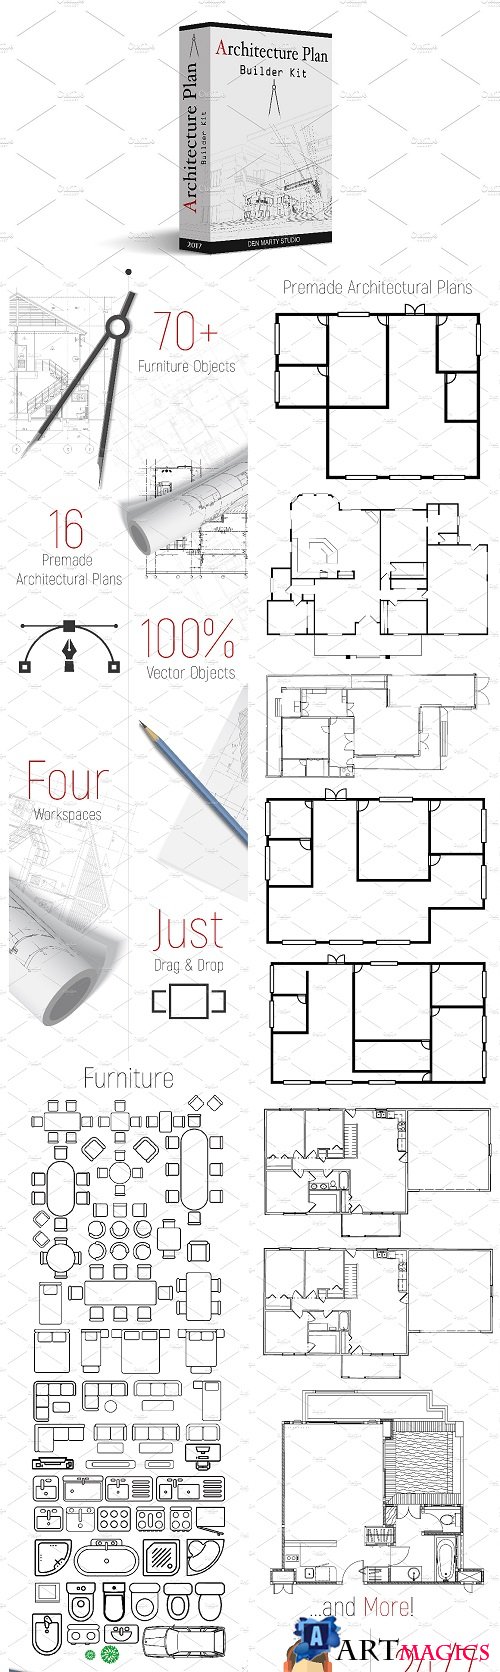 Architecture Floor Plan Builder Kit 1829510